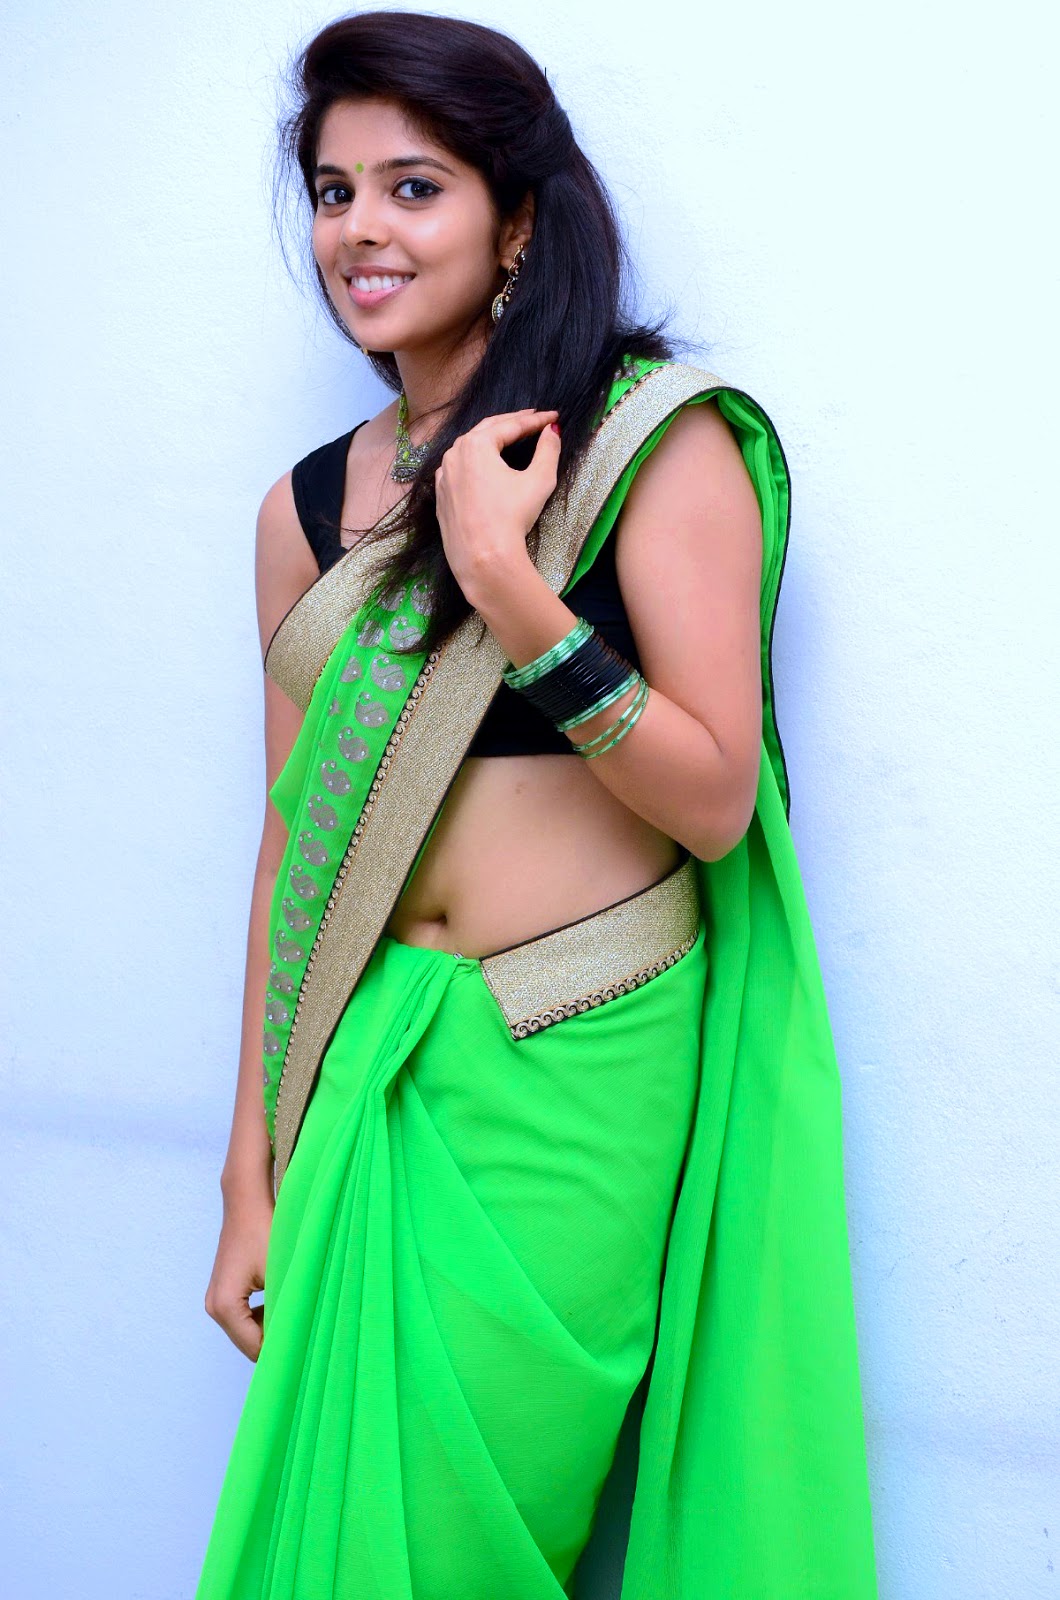 Beauty Galore HD : Shravya Hot Navel In Green Saree